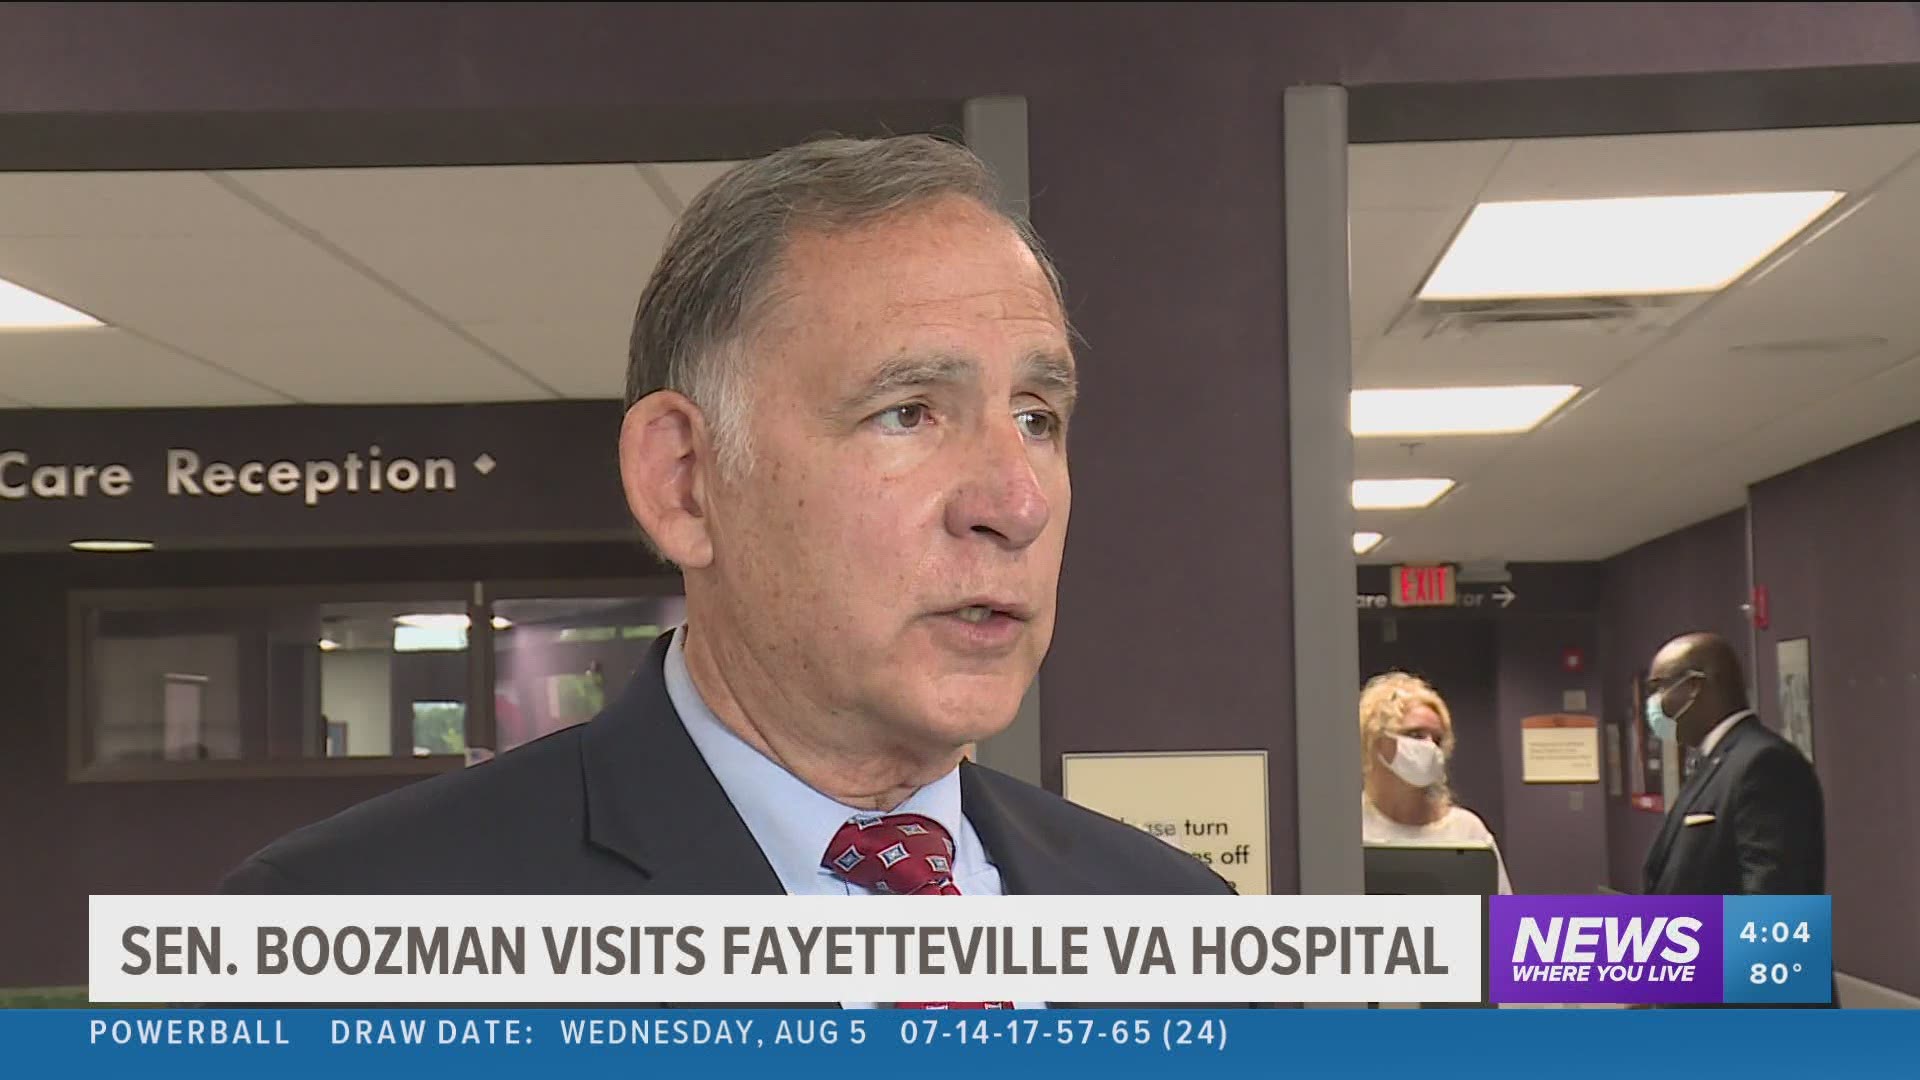 Senator Boozman visits Fayetteville VA hospital.